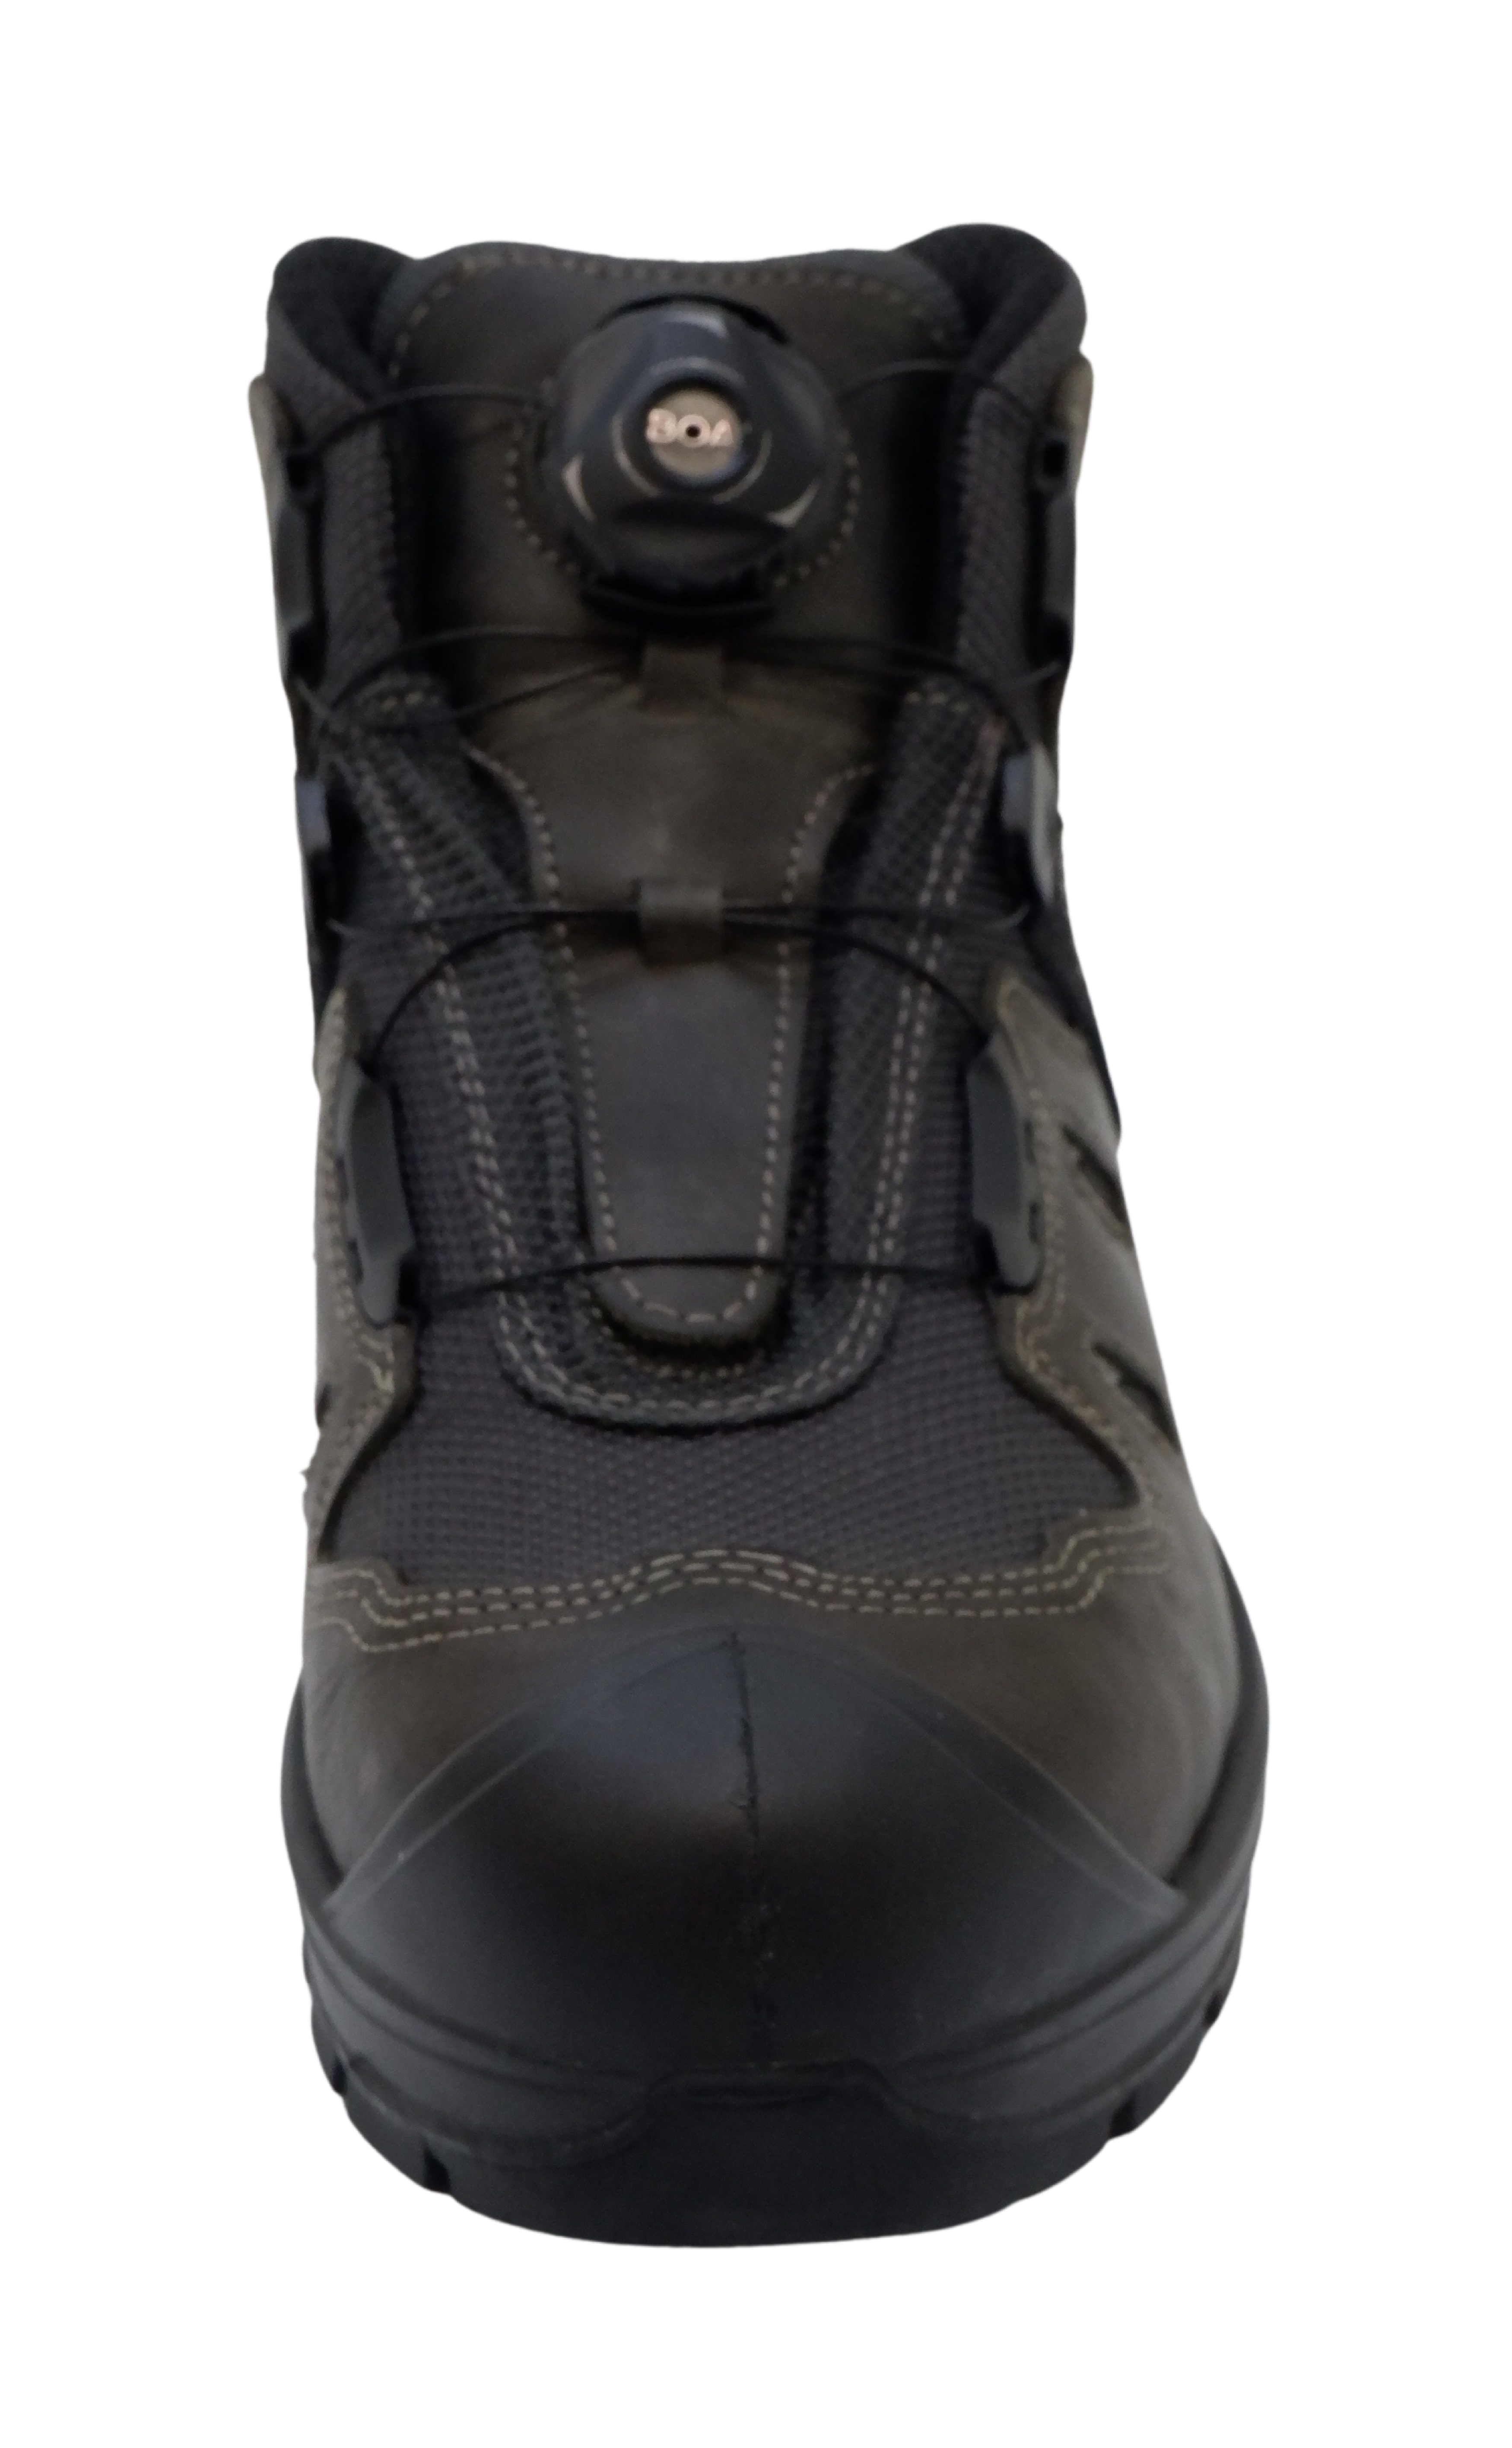 Grisport Men's Safety Work Boots BOA Fairweather 6" Steel Toe Cap with Vibram® TC4+ Sole  Sizes 7-13